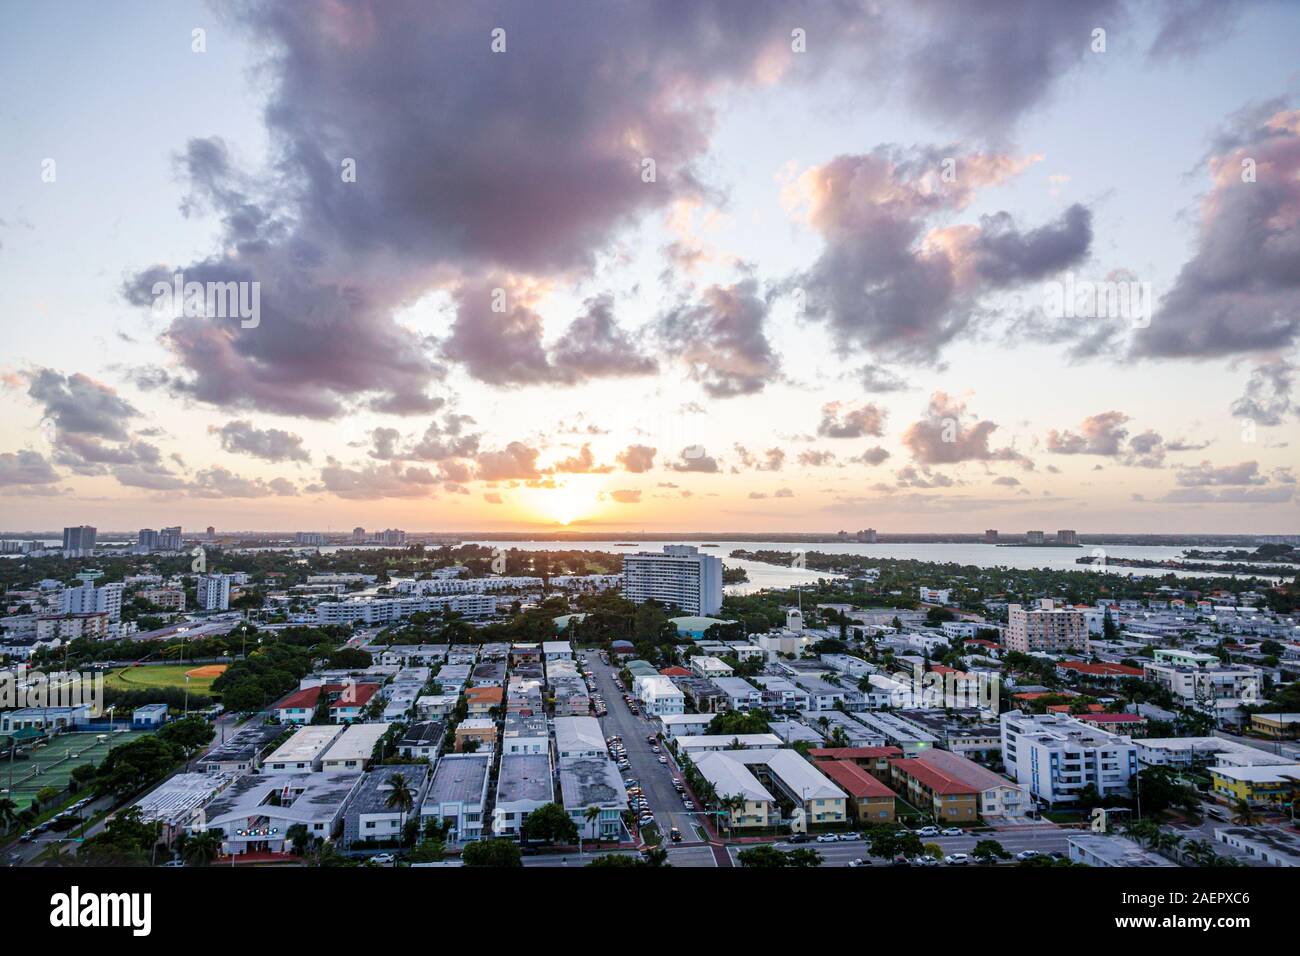 Miami Beach Florida,North Beach,city skyline,rooftops,Biscayne Bay,sunset,FL190920182 Stock Photo